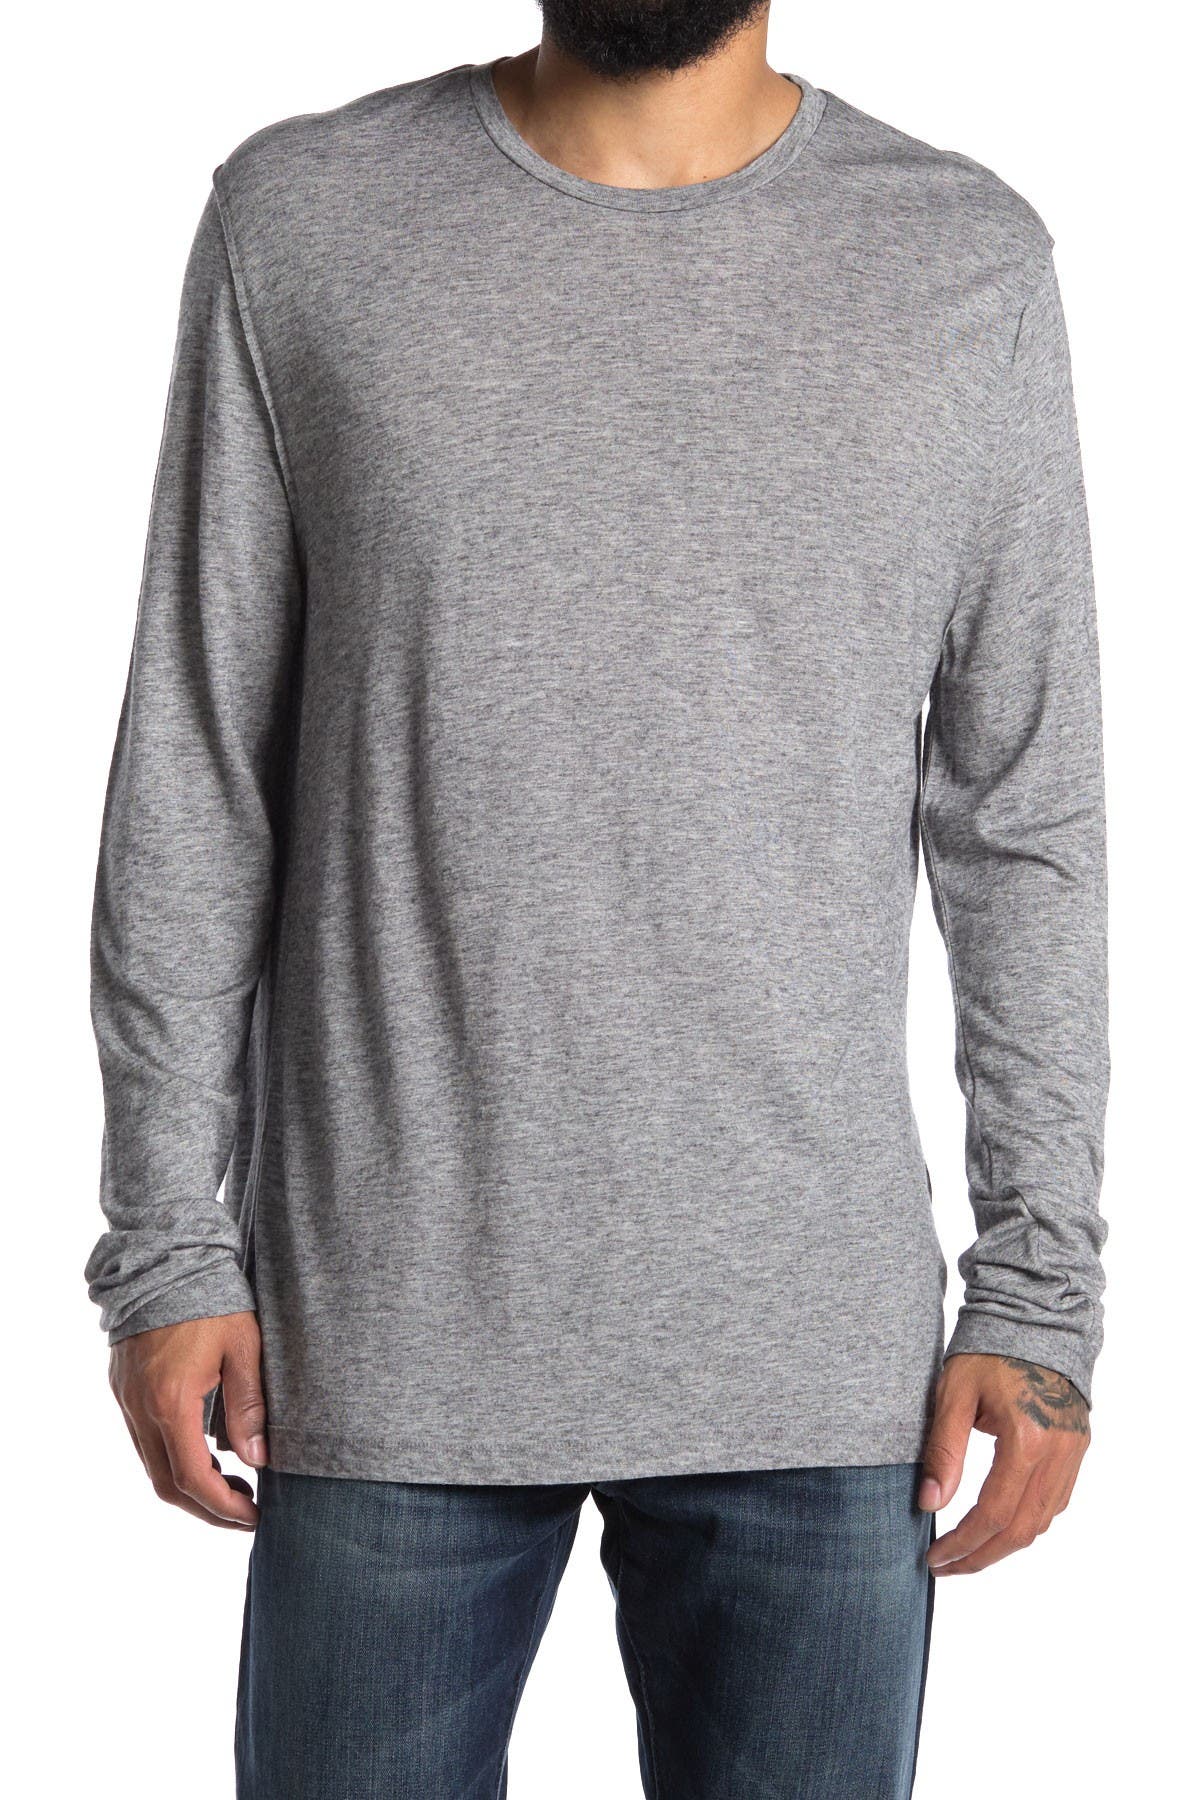 Allsaints Quinn Long Sleeve Crew Neck Shirt In Grey Marl